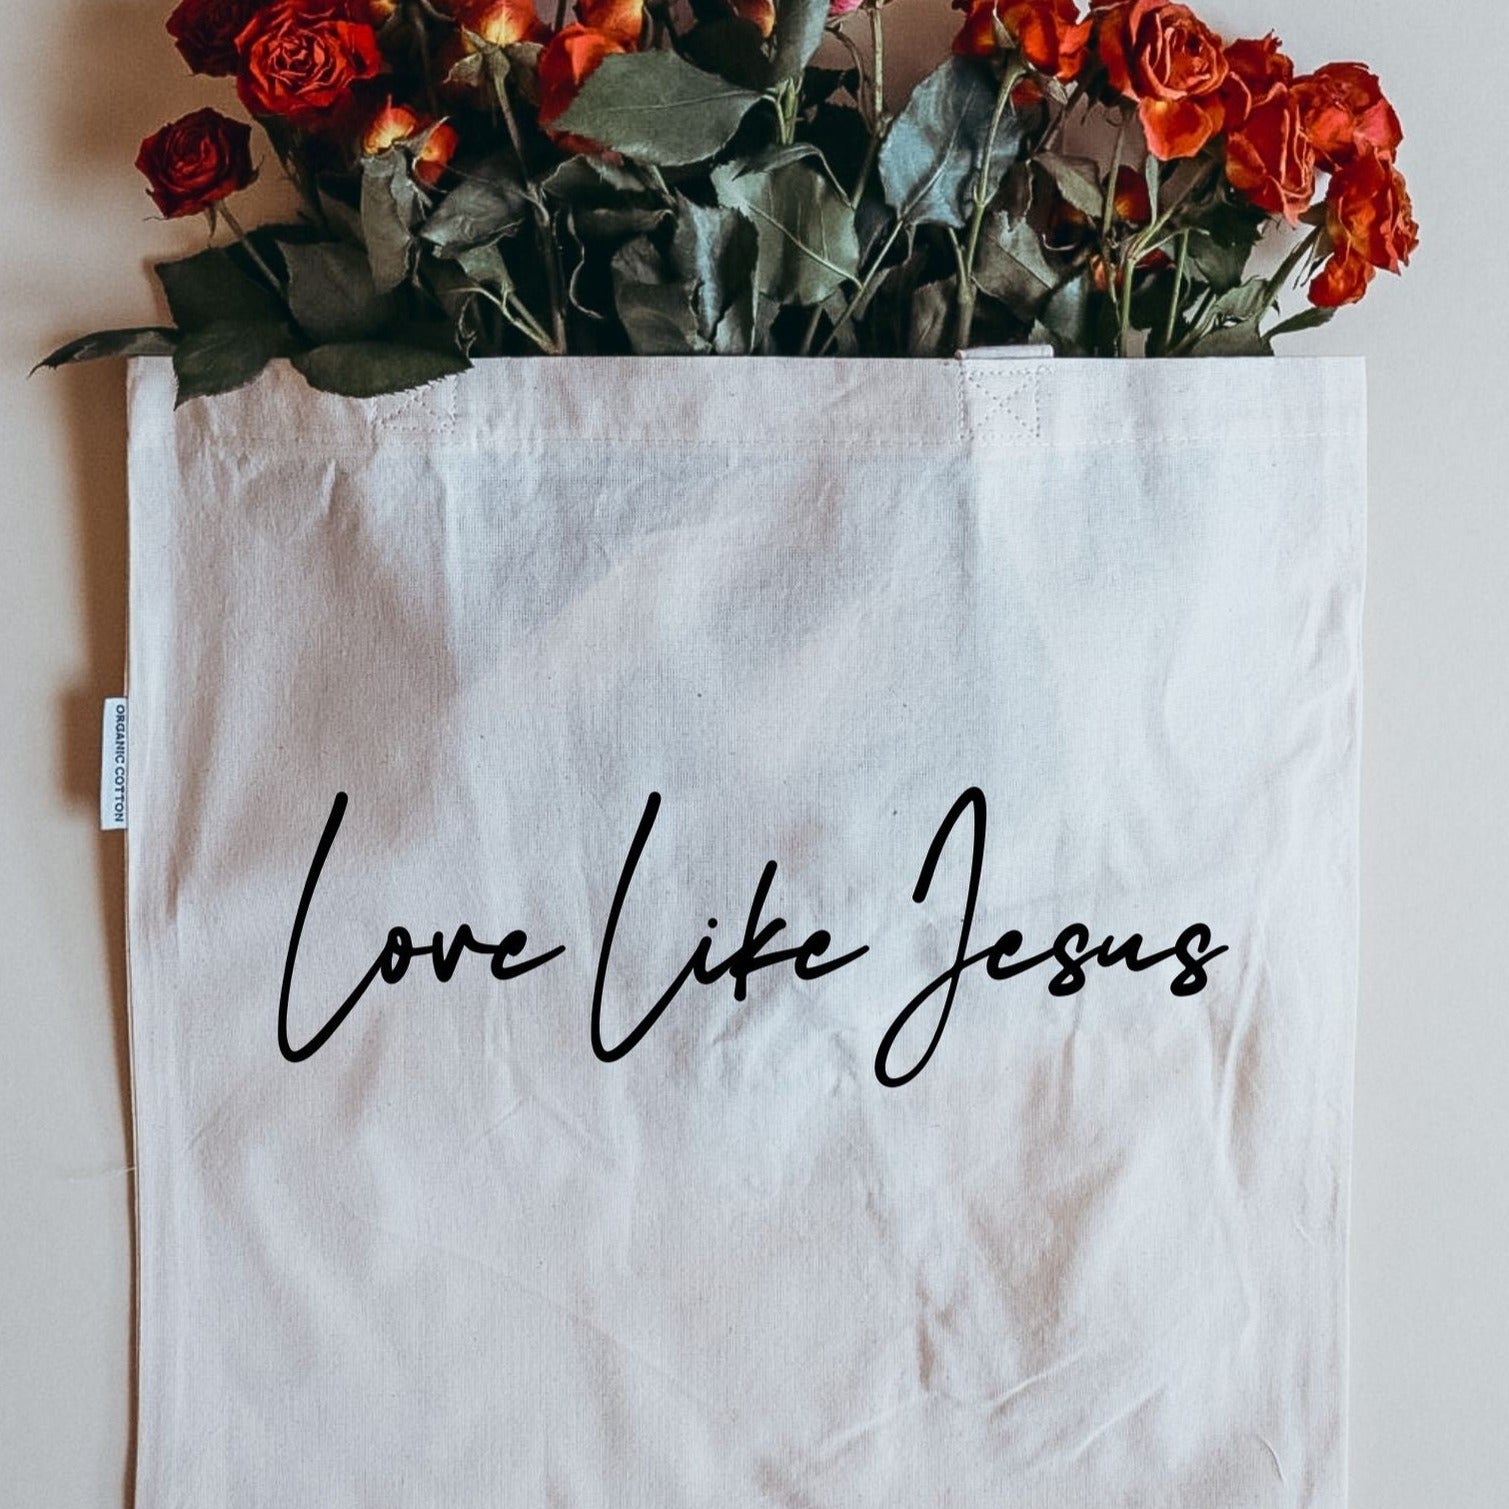 Love like Jesus tote bag